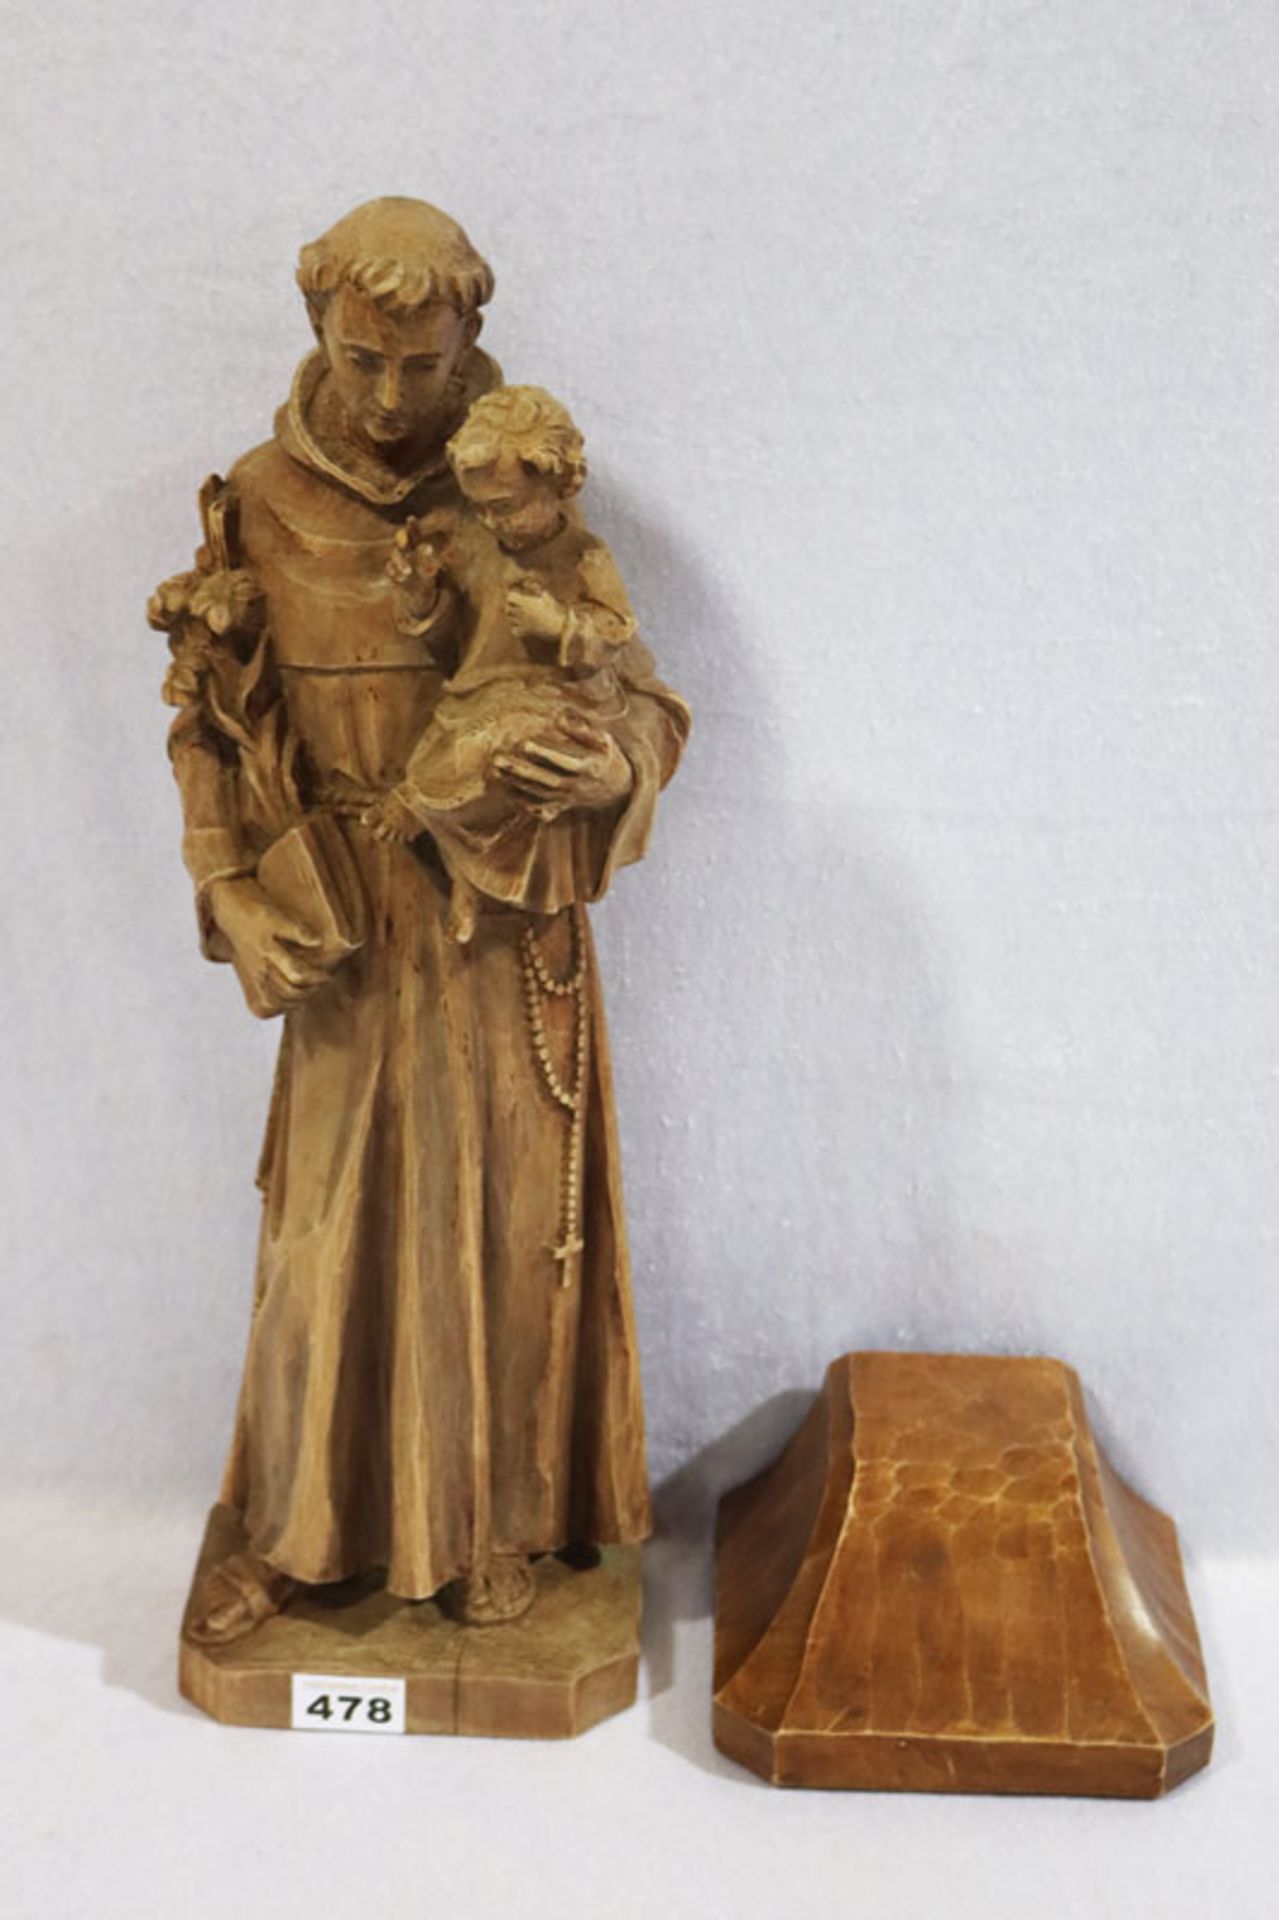 Holz Figurenskulptur 'Heiliger Antonius', gebeizt, teils beschädigt, H 52 cm, sowie Wandsockel, H 11